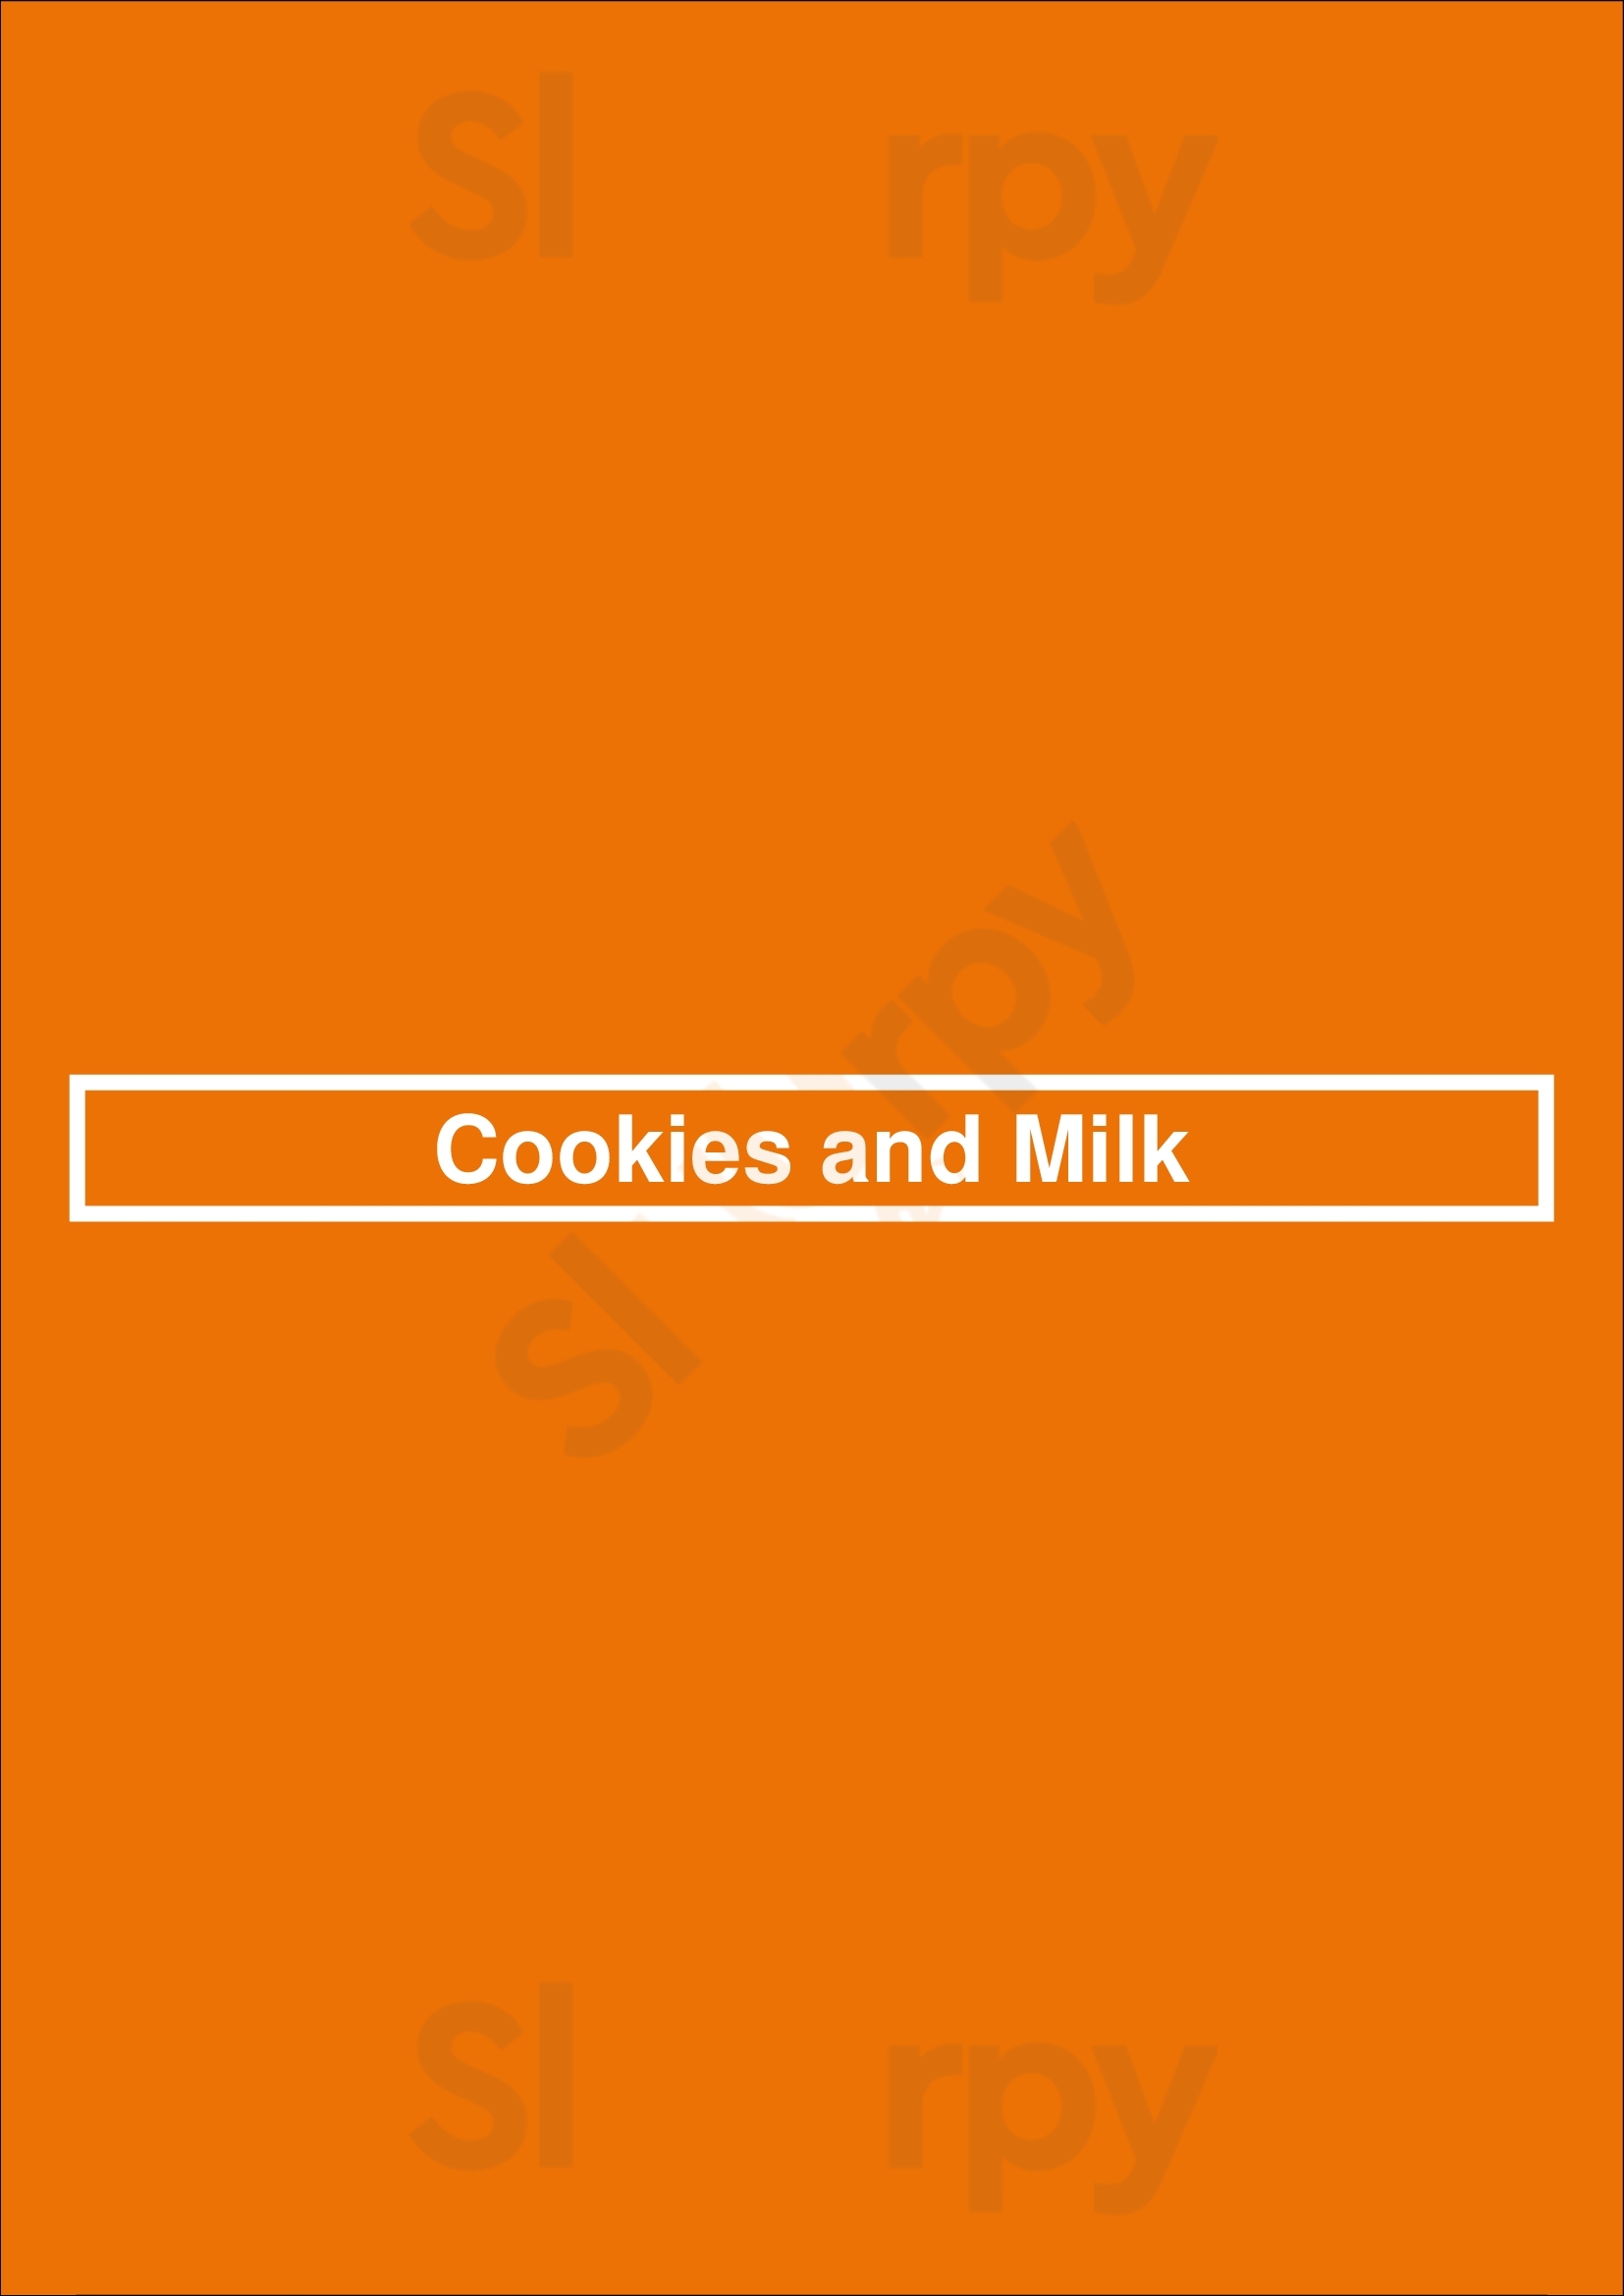 Cookies And Milk Sacramento Menu - 1